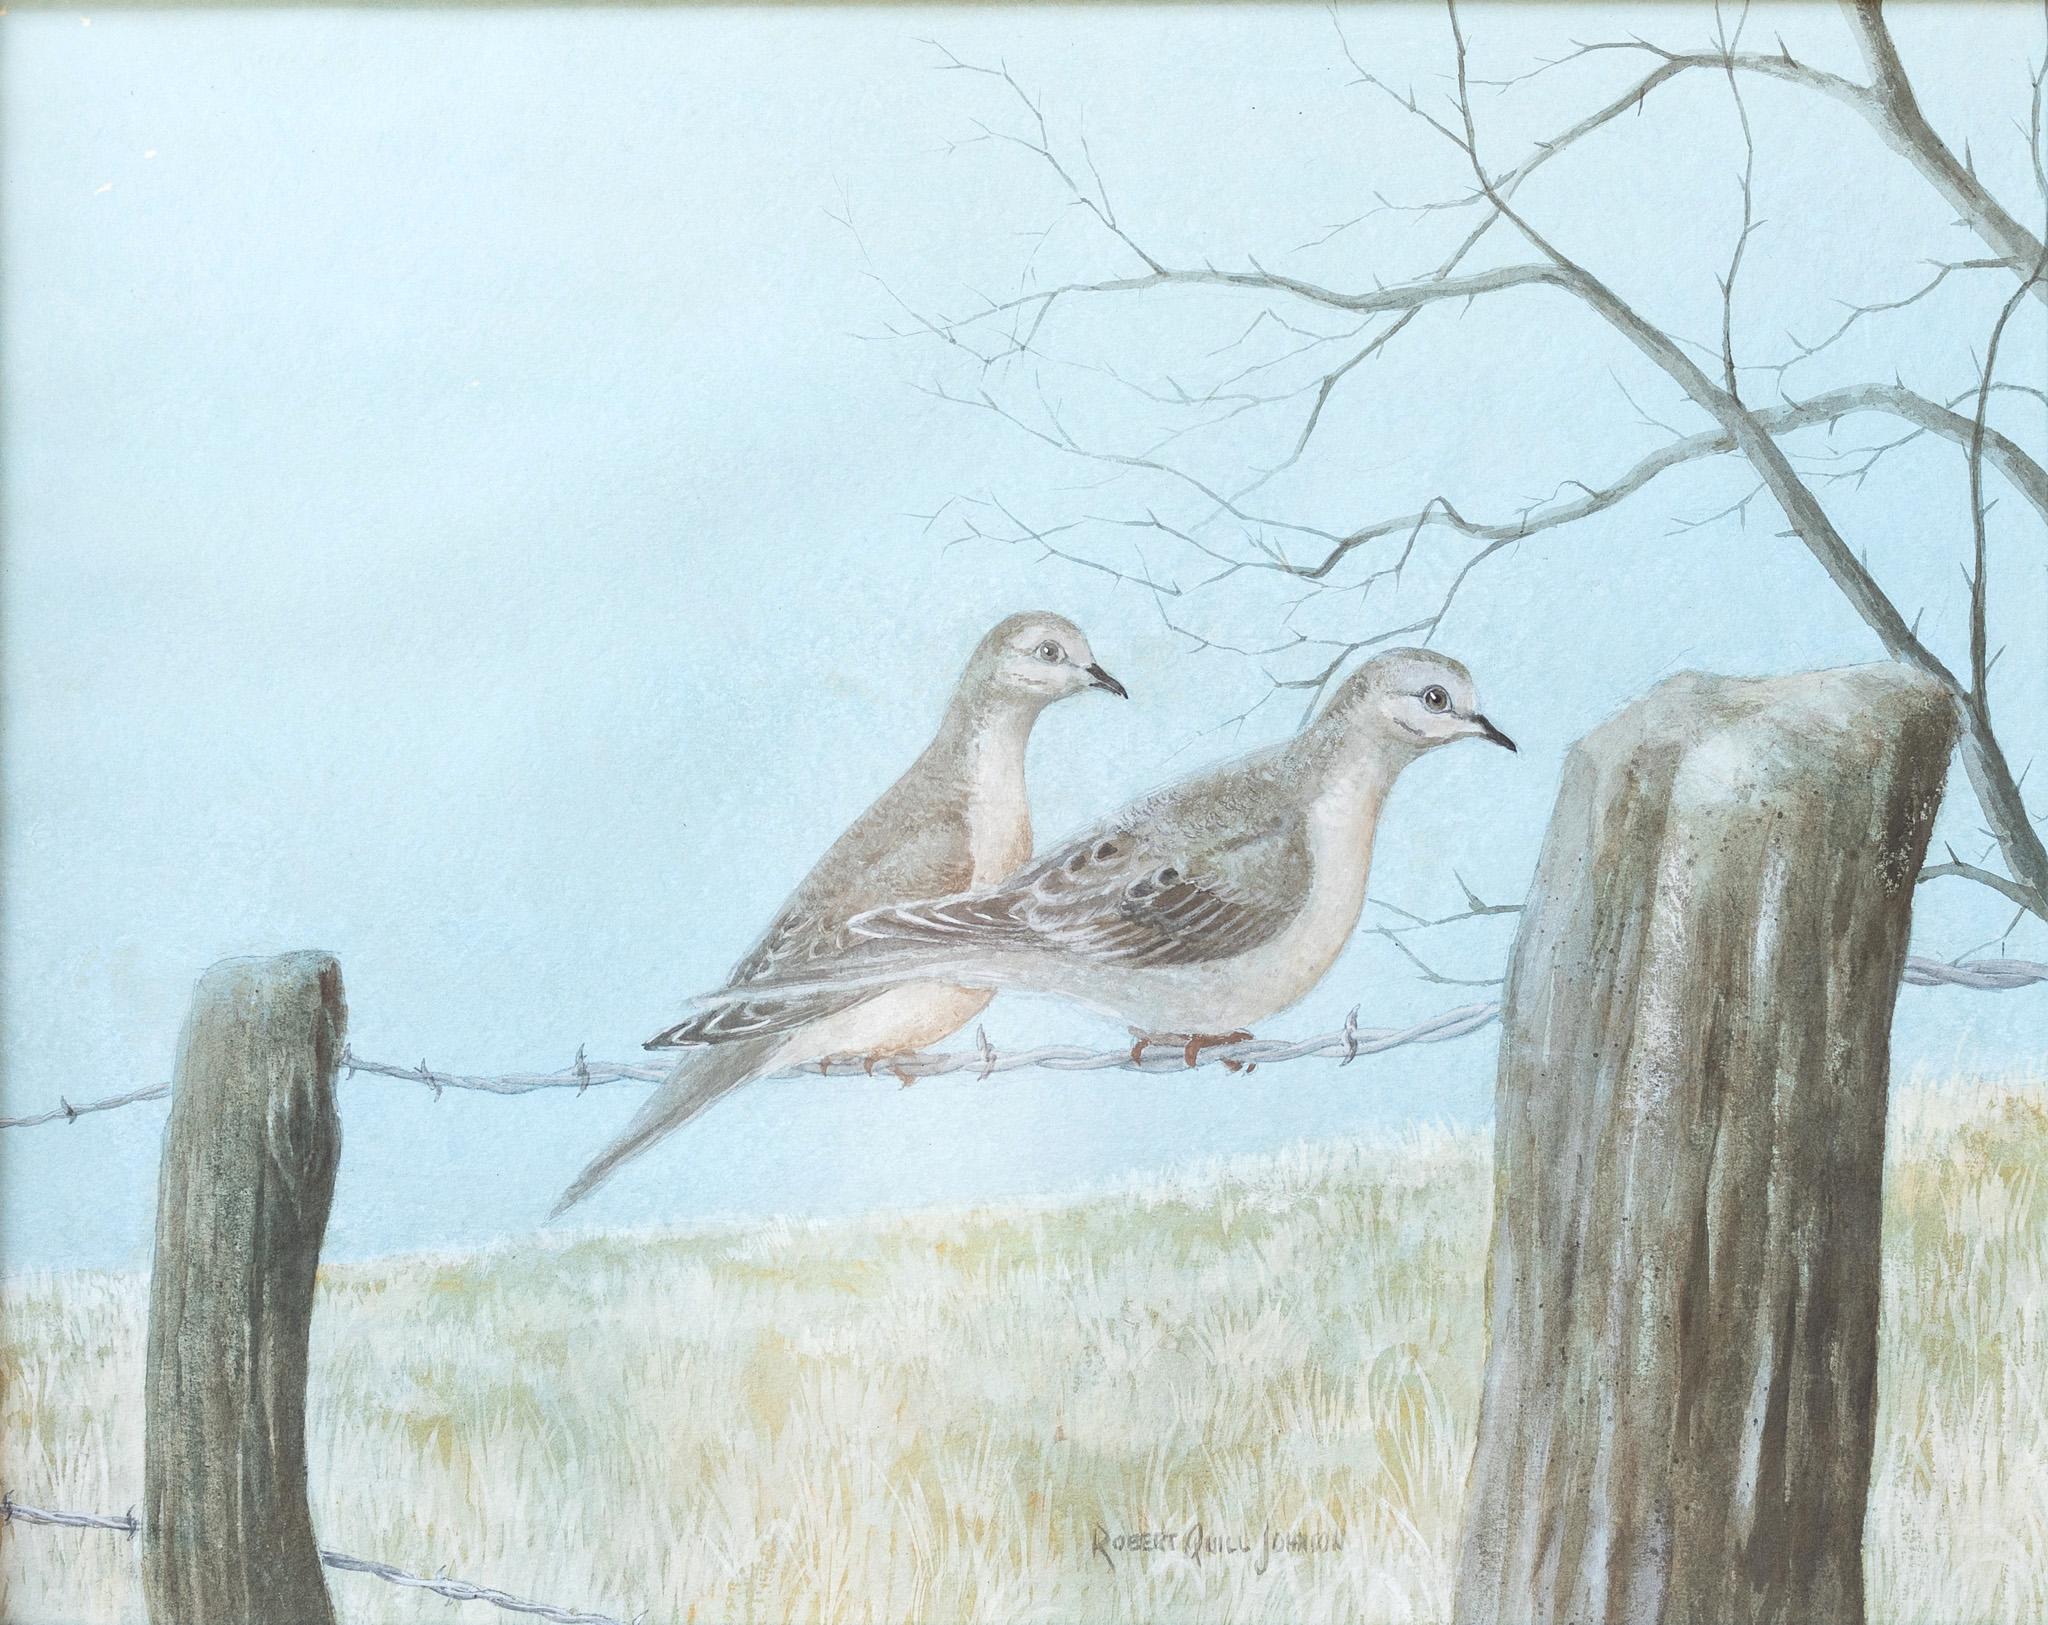 Robert Quill Johnson Landscape Art - Pair of Doves